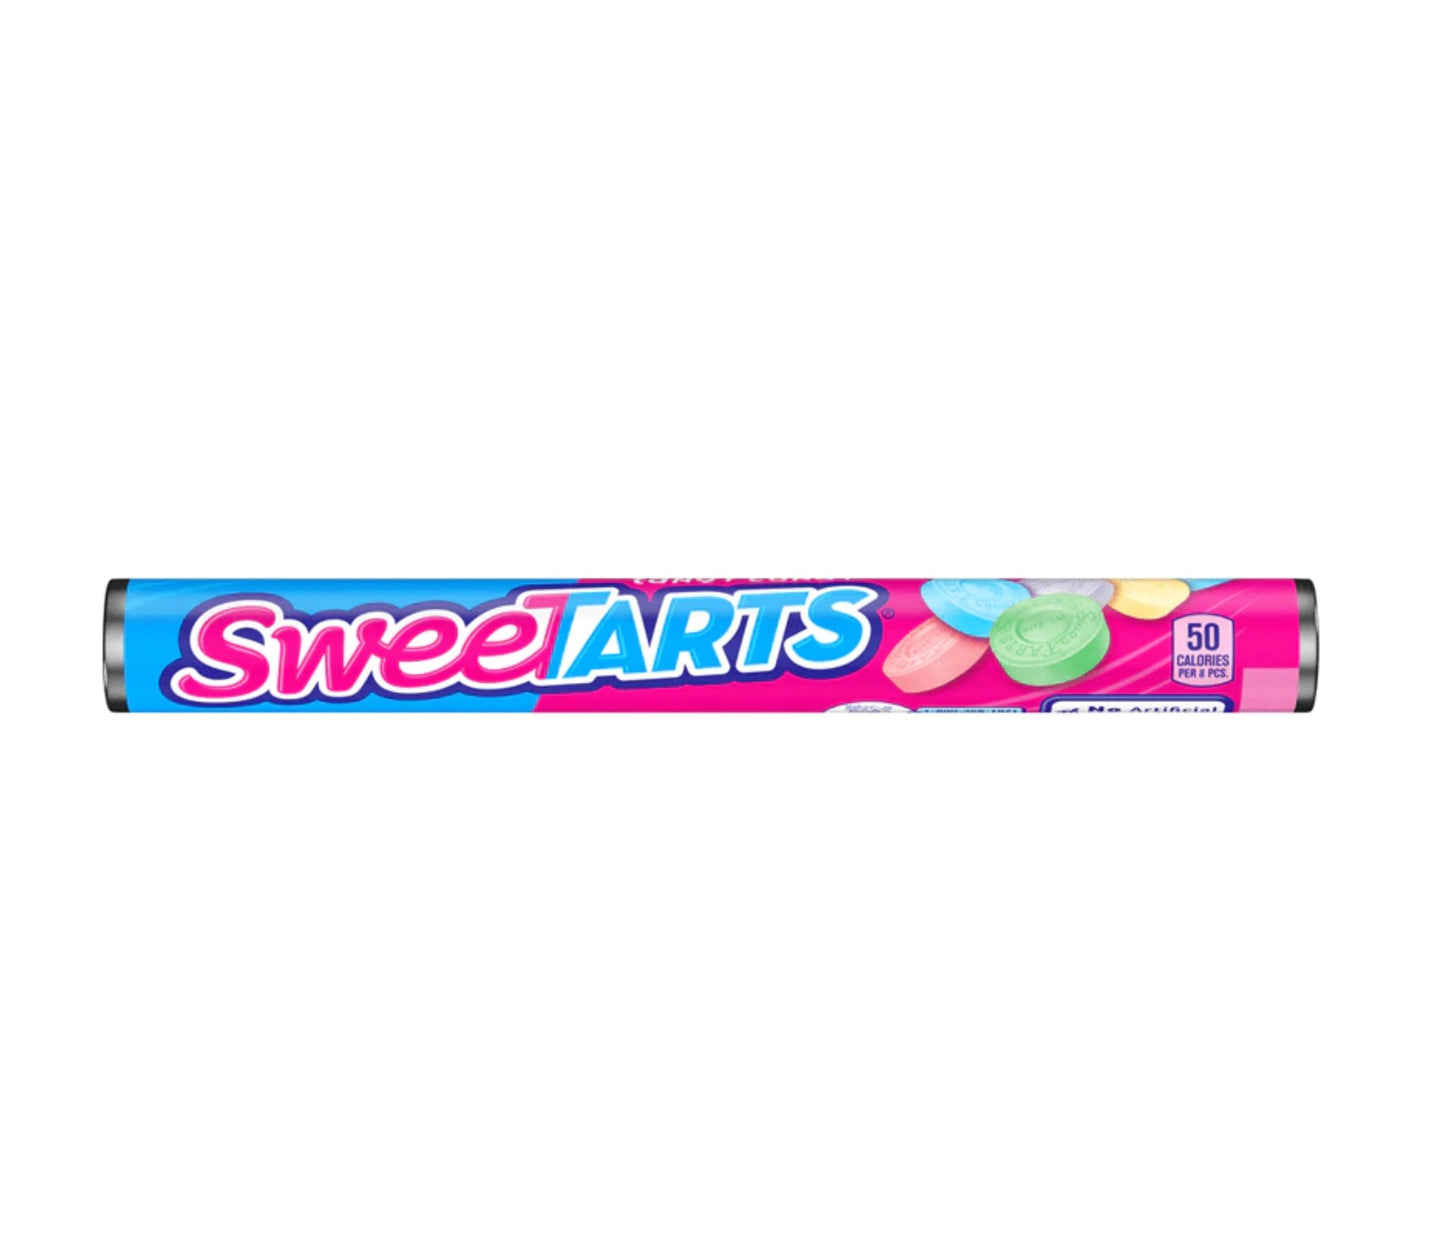 Sweetarts Roll 51g – Box of 36